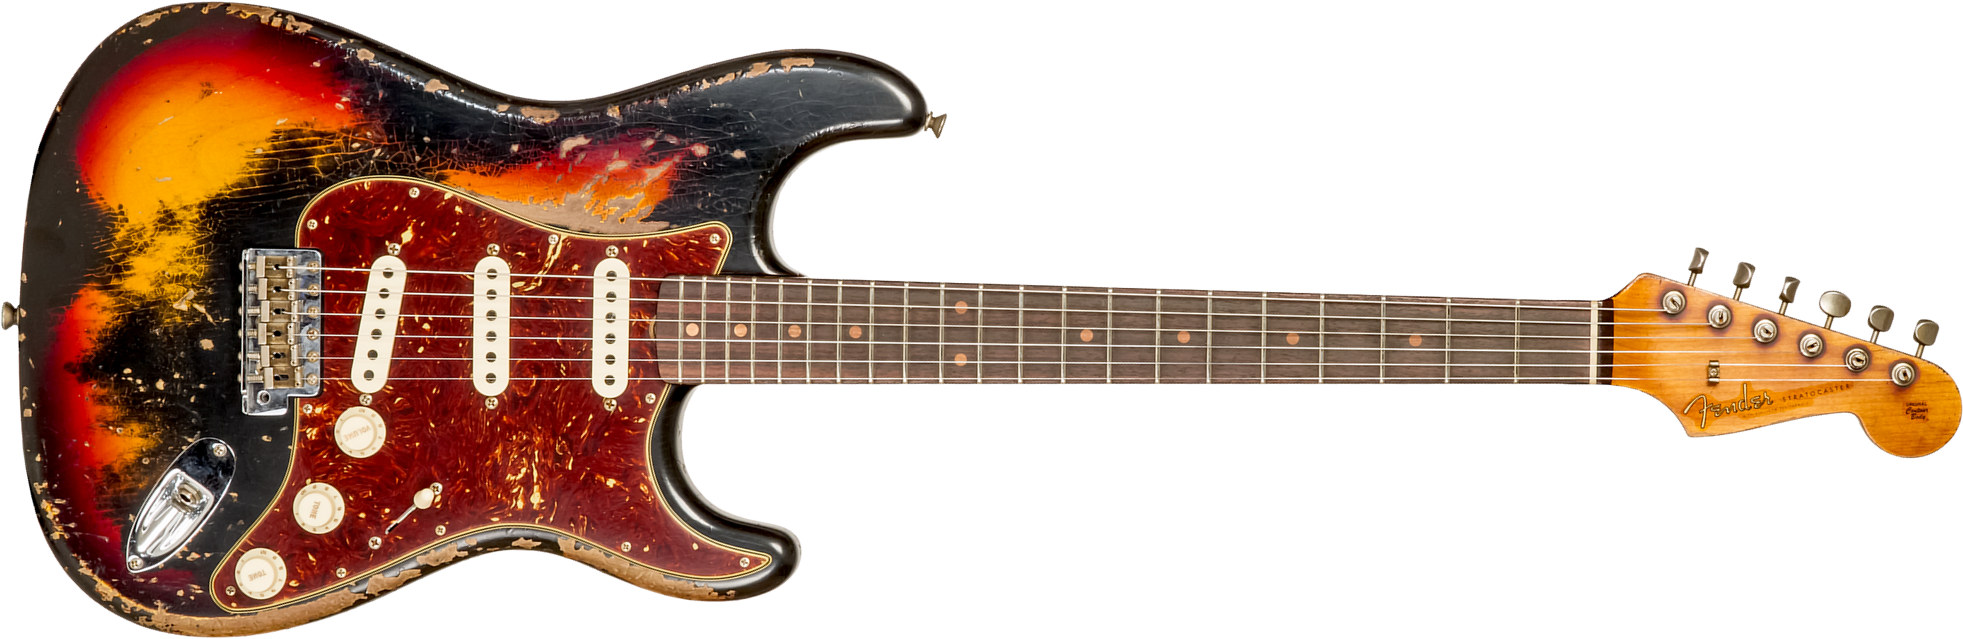 Fender Custom Shop Strat 1961 3s Trem Rw #cz576153 - Super Heavy Relic Black O. 3-color Sunburst - Elektrische gitaar in Str-vorm - Main picture